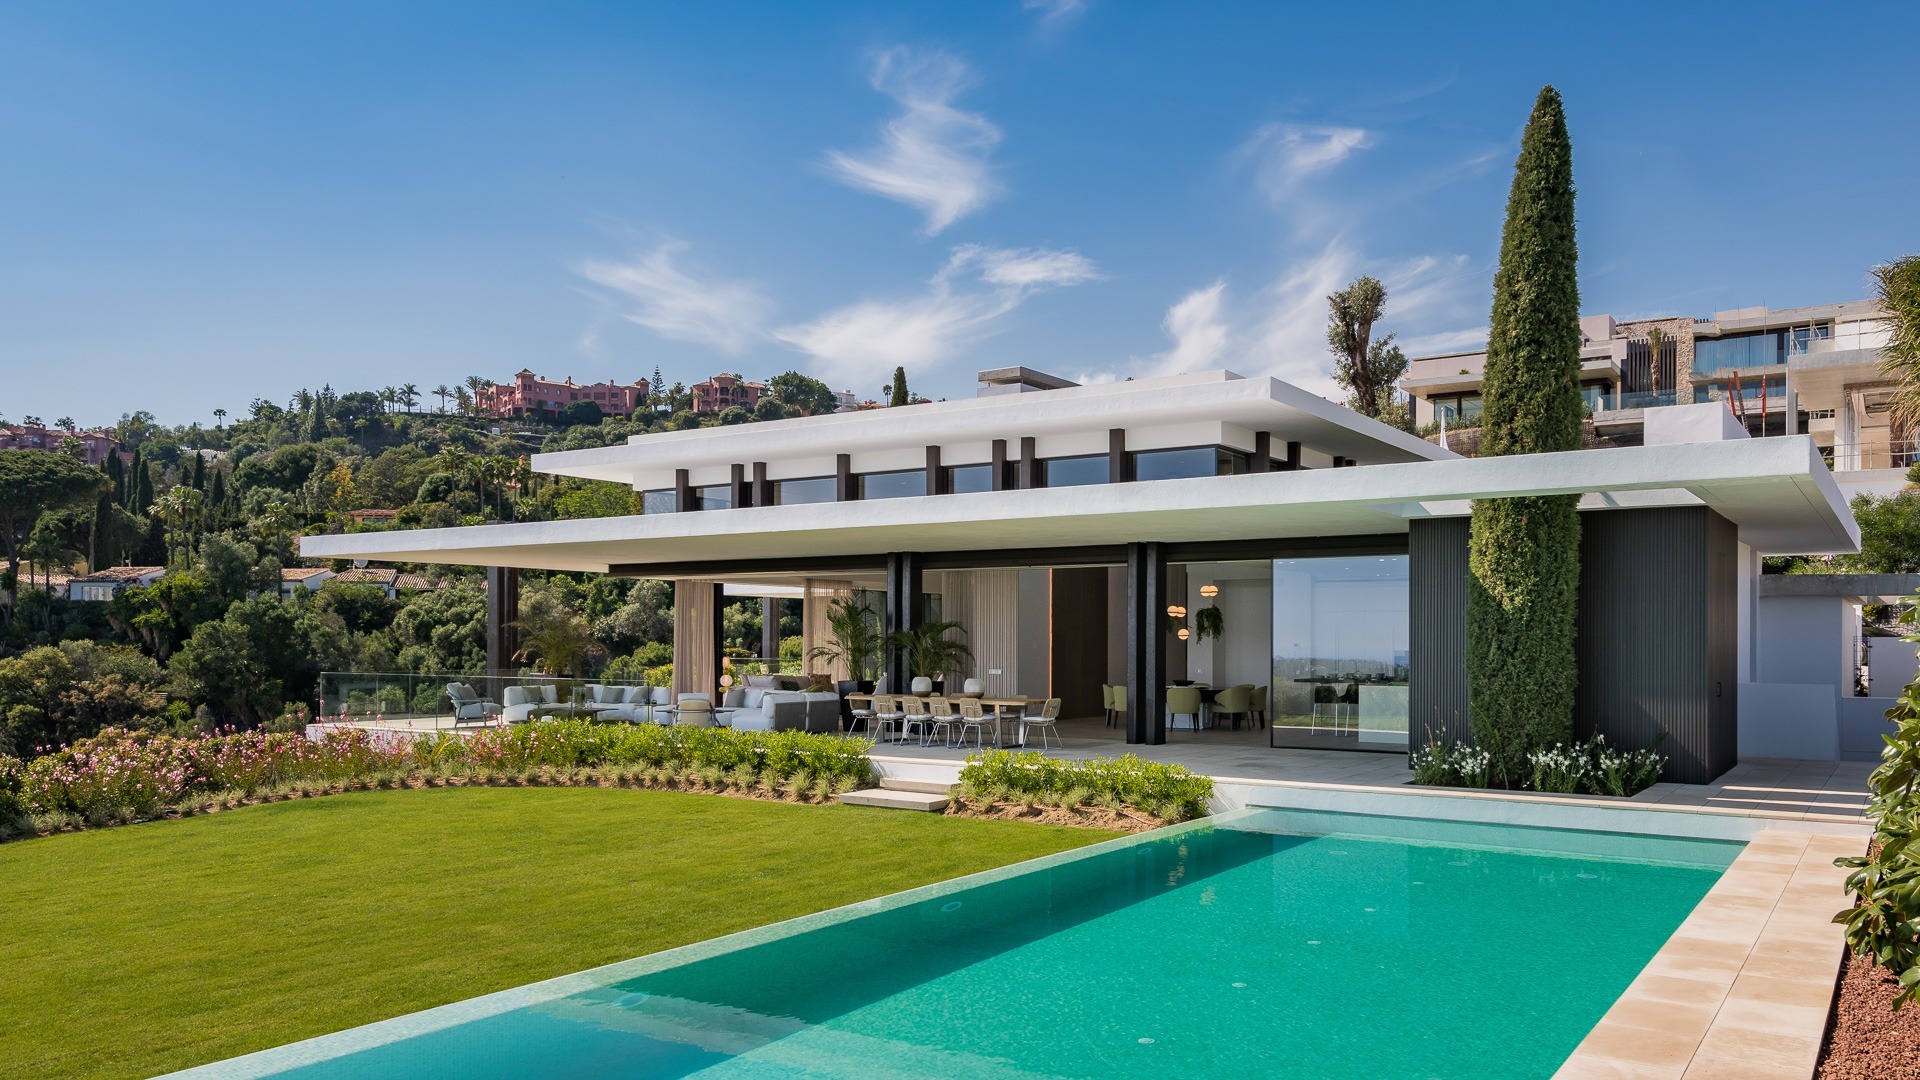 Exclusive top villa garden - El Herrojo - Benahavis